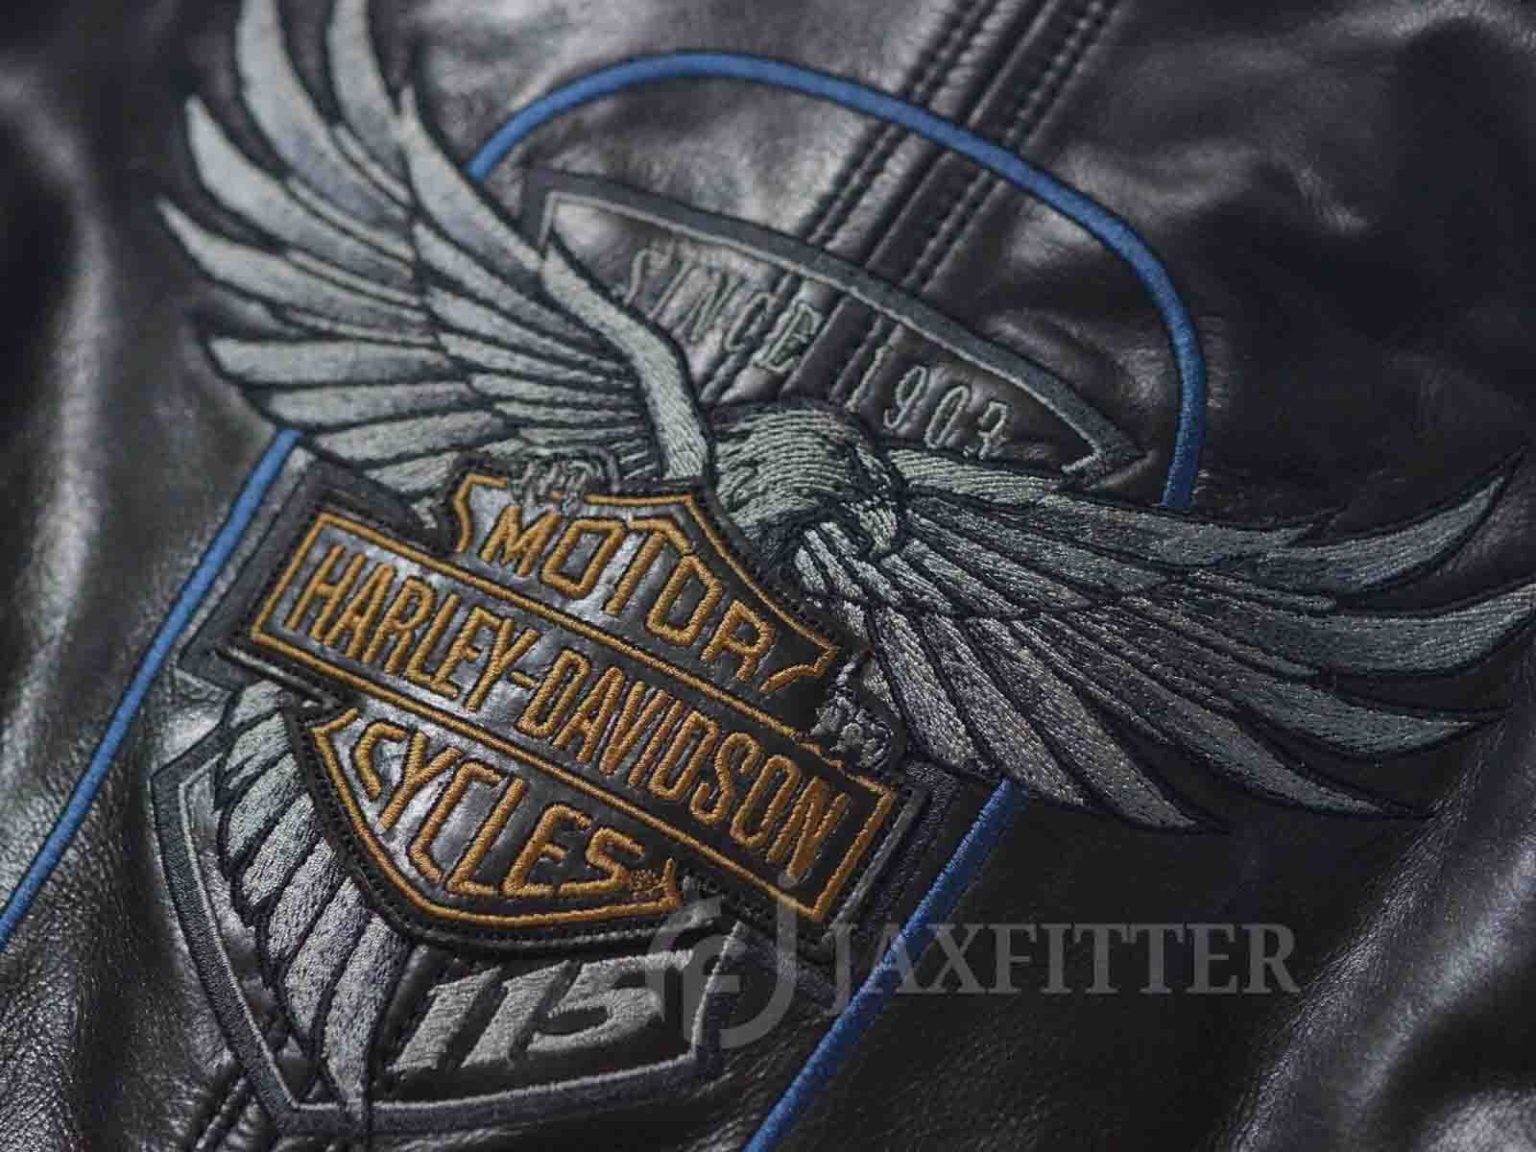 Harley Davidson 115th Anniversary Eagle Leather Jacket - Jax Fitter